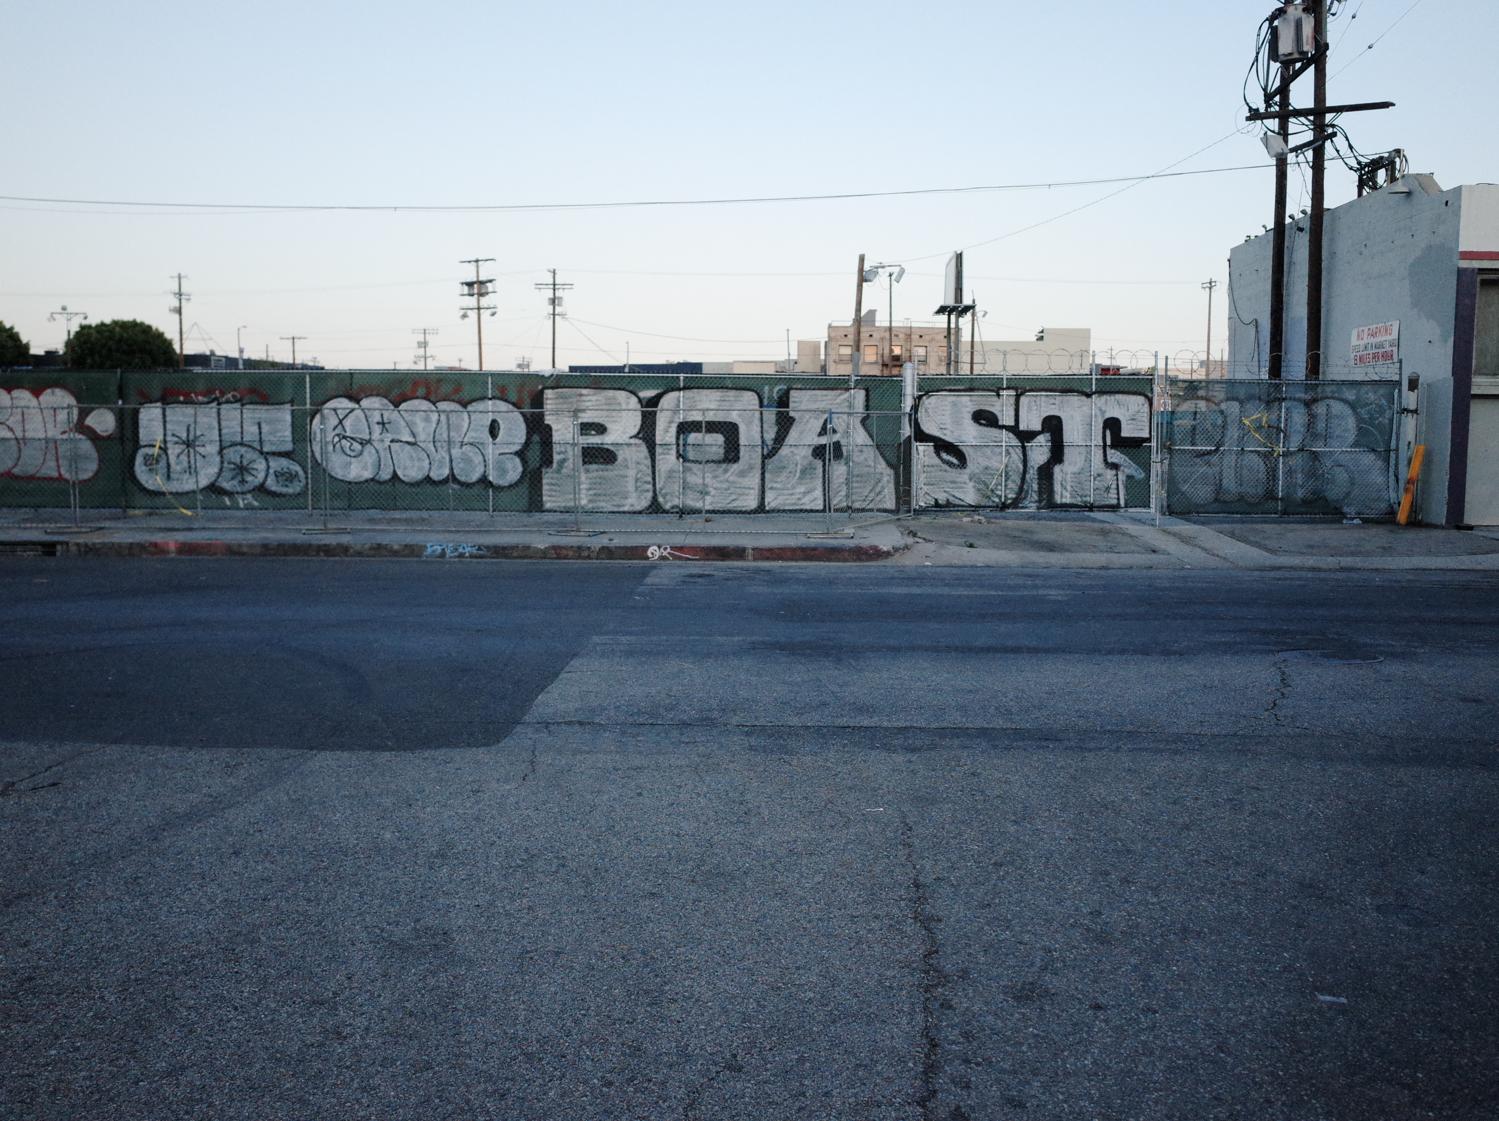 BOAST - Los Angeles graffiti